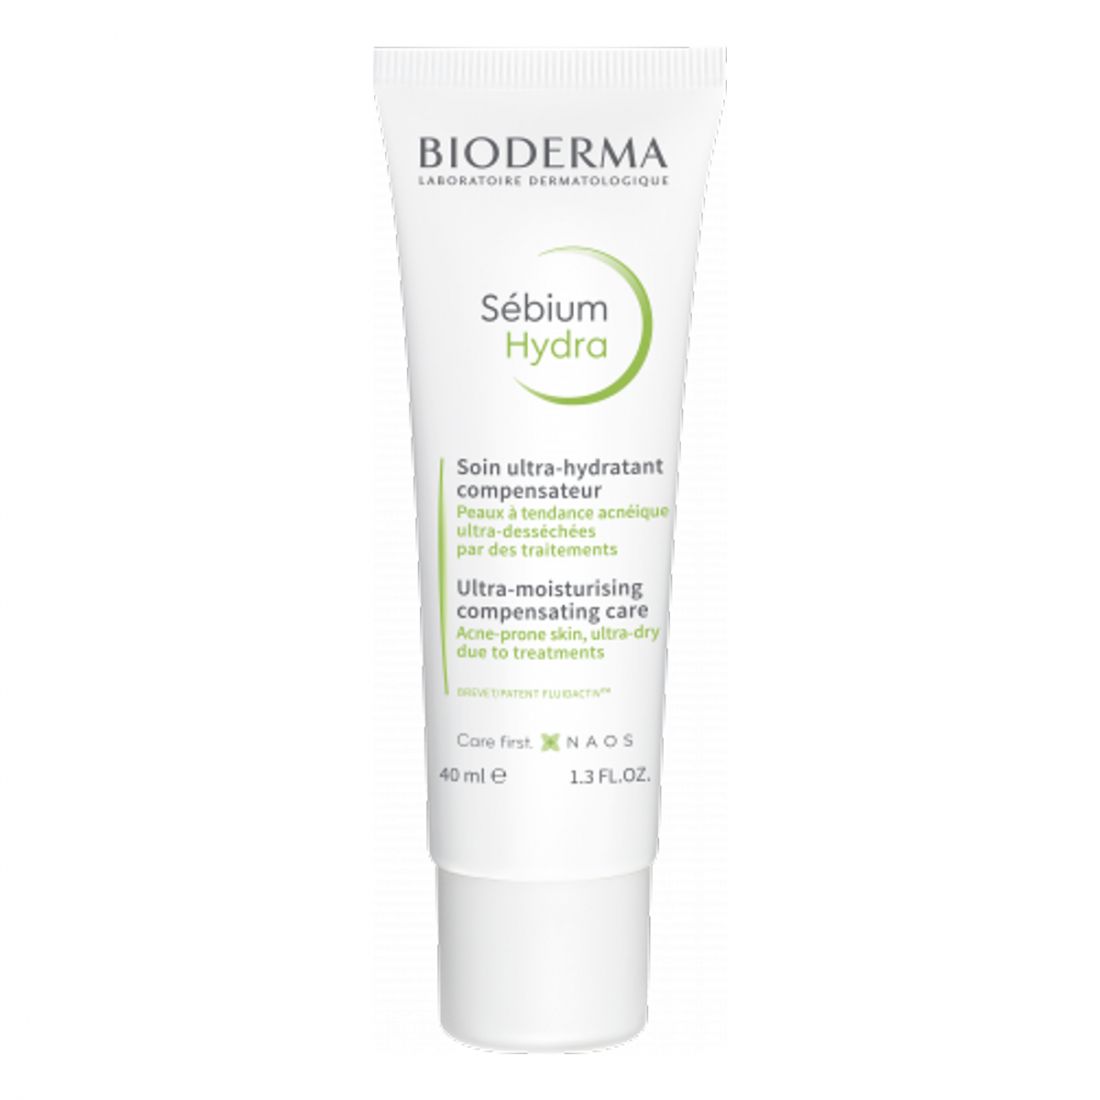 Bioderma - Crème hydratante 'Sébium Hydra' - 40 ml